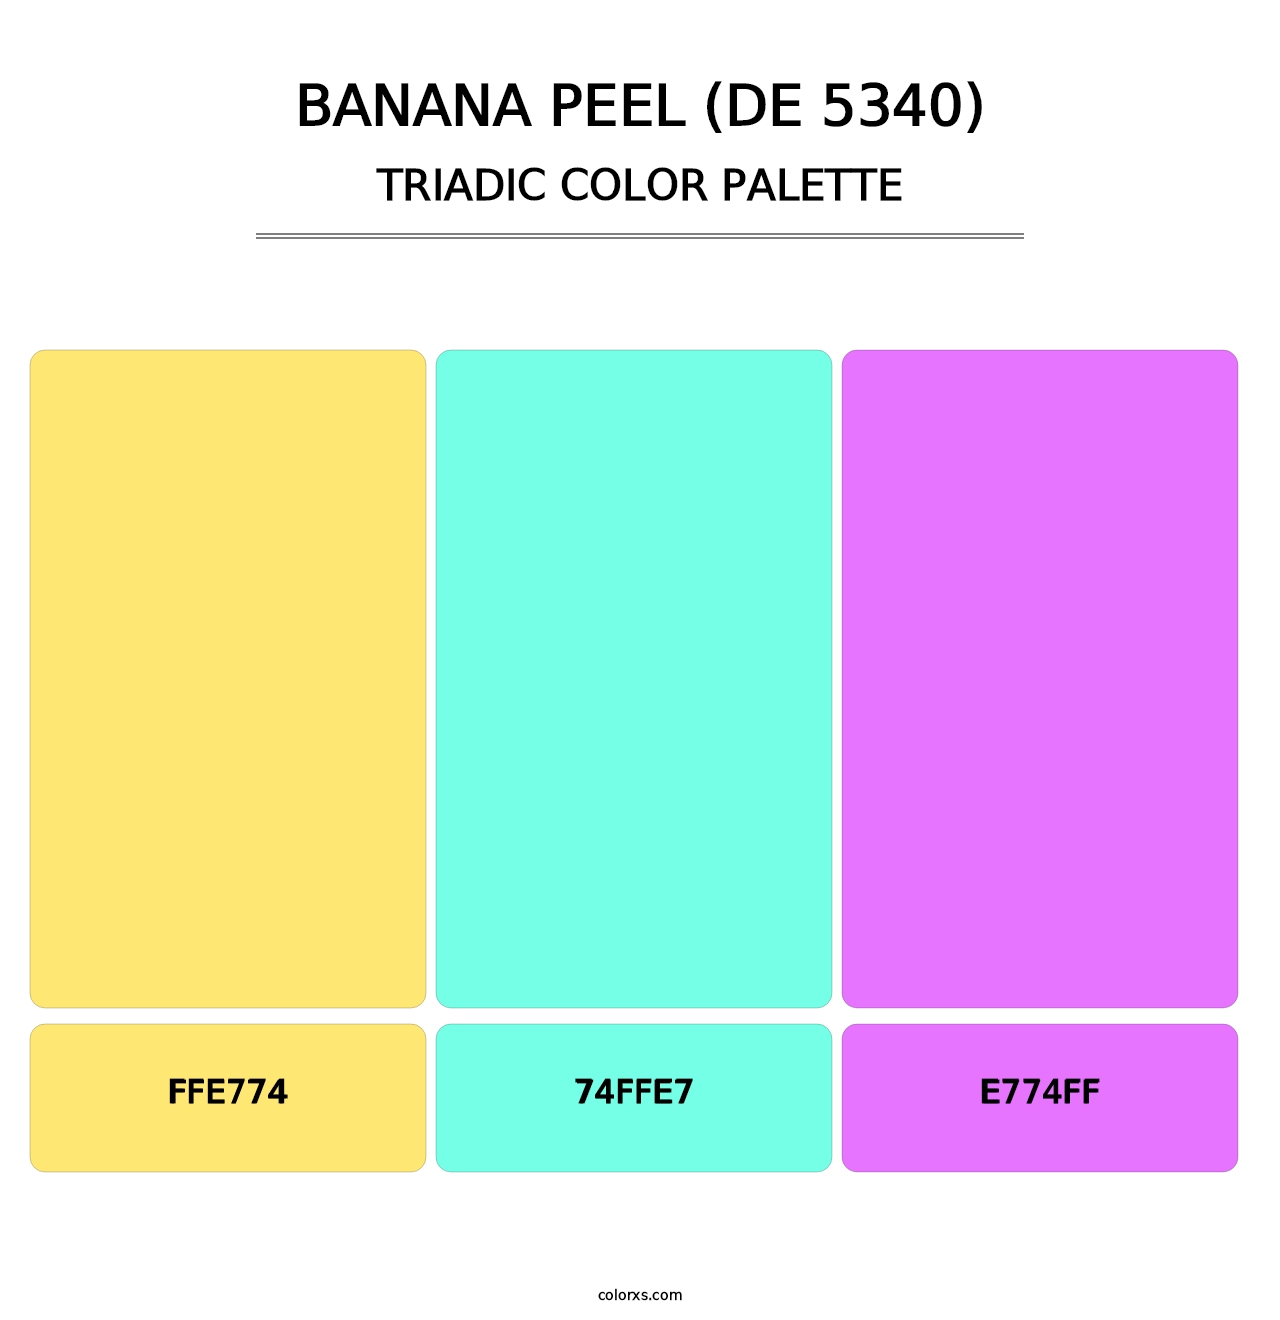 Banana Peel (DE 5340) - Triadic Color Palette